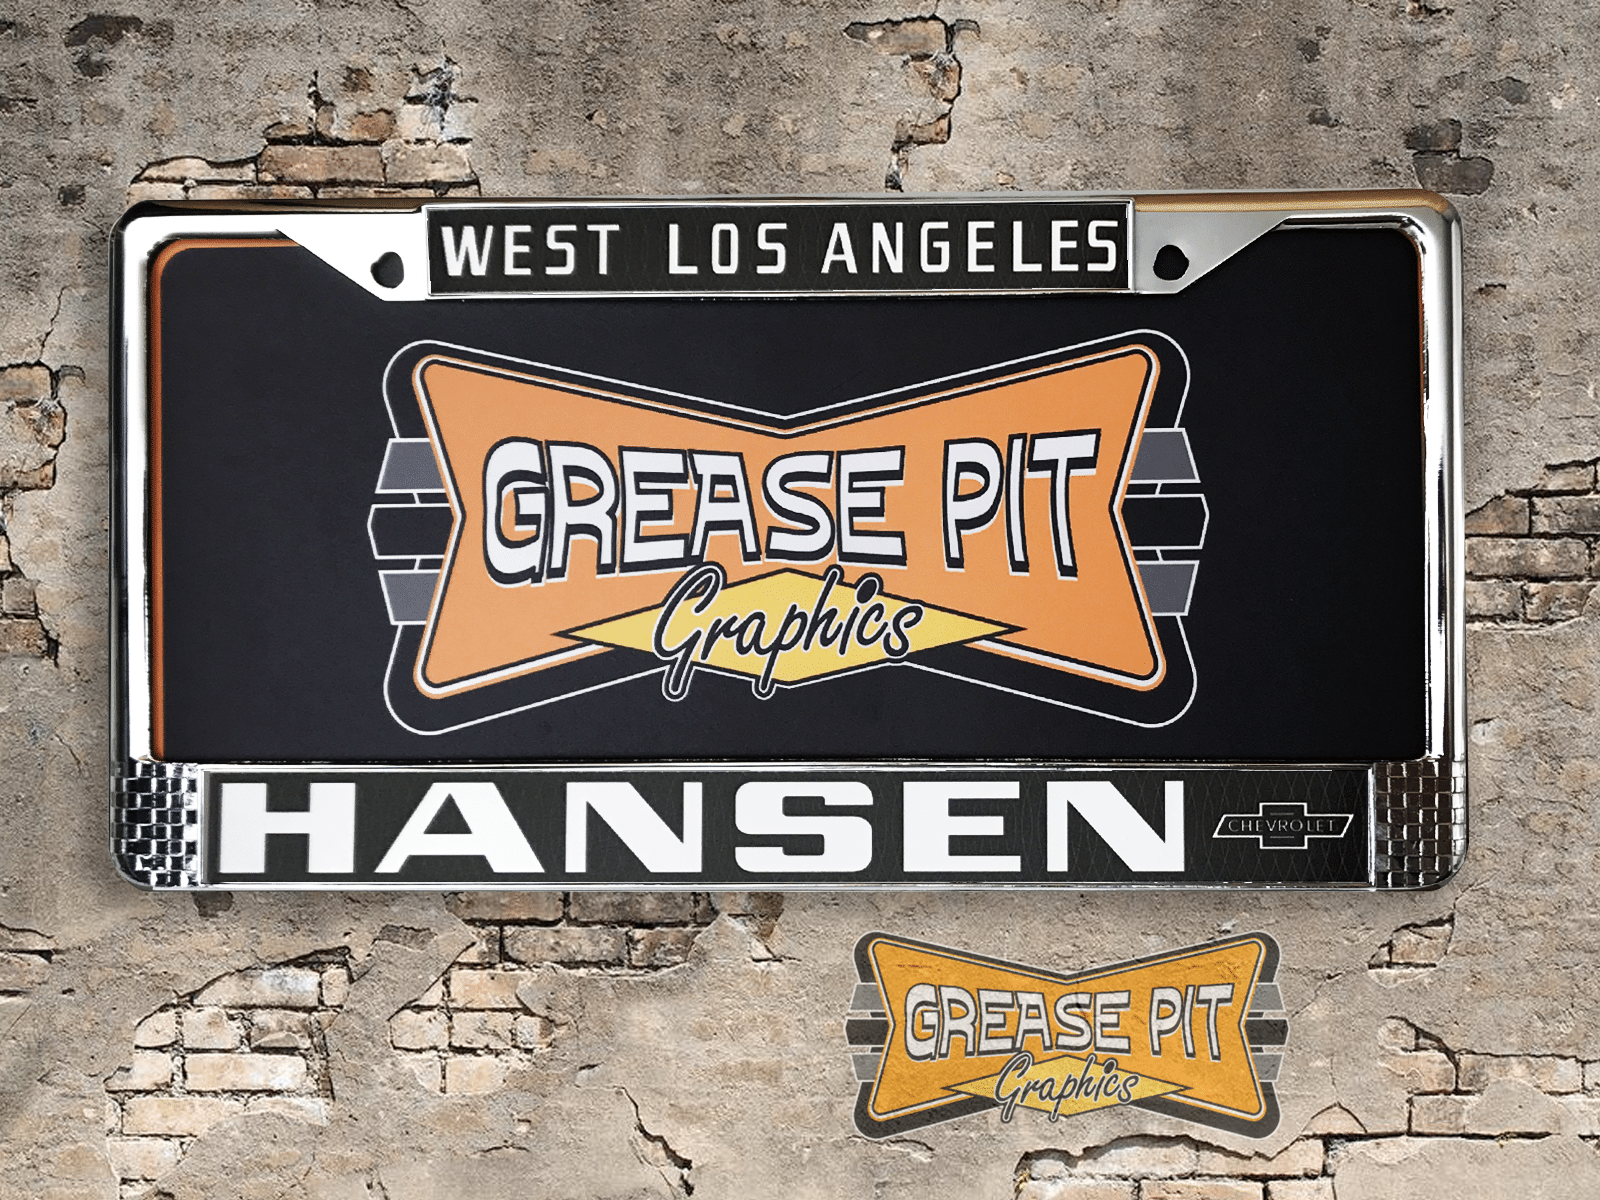 Hansen Chevrolet West Los Angeles License Plate Frame Tribute